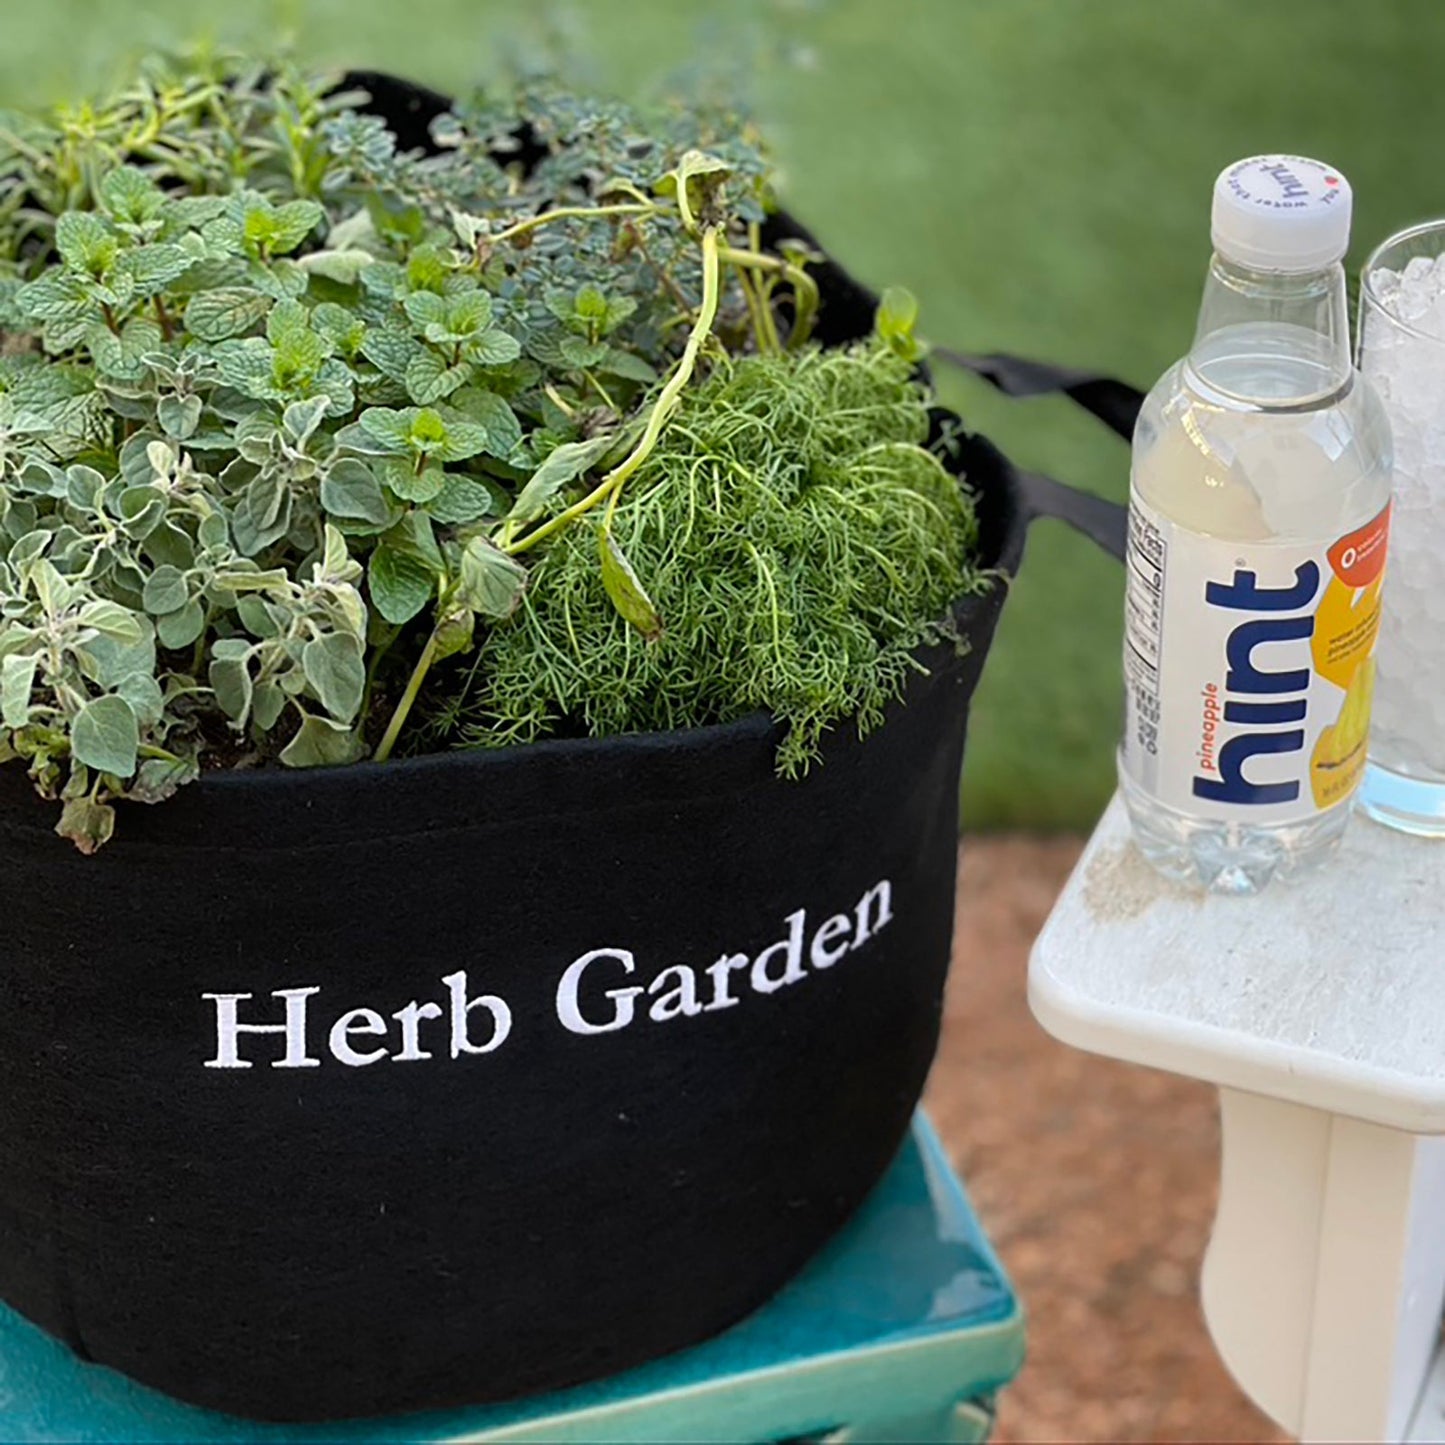 Garden Kit with culinary seasonal herbs